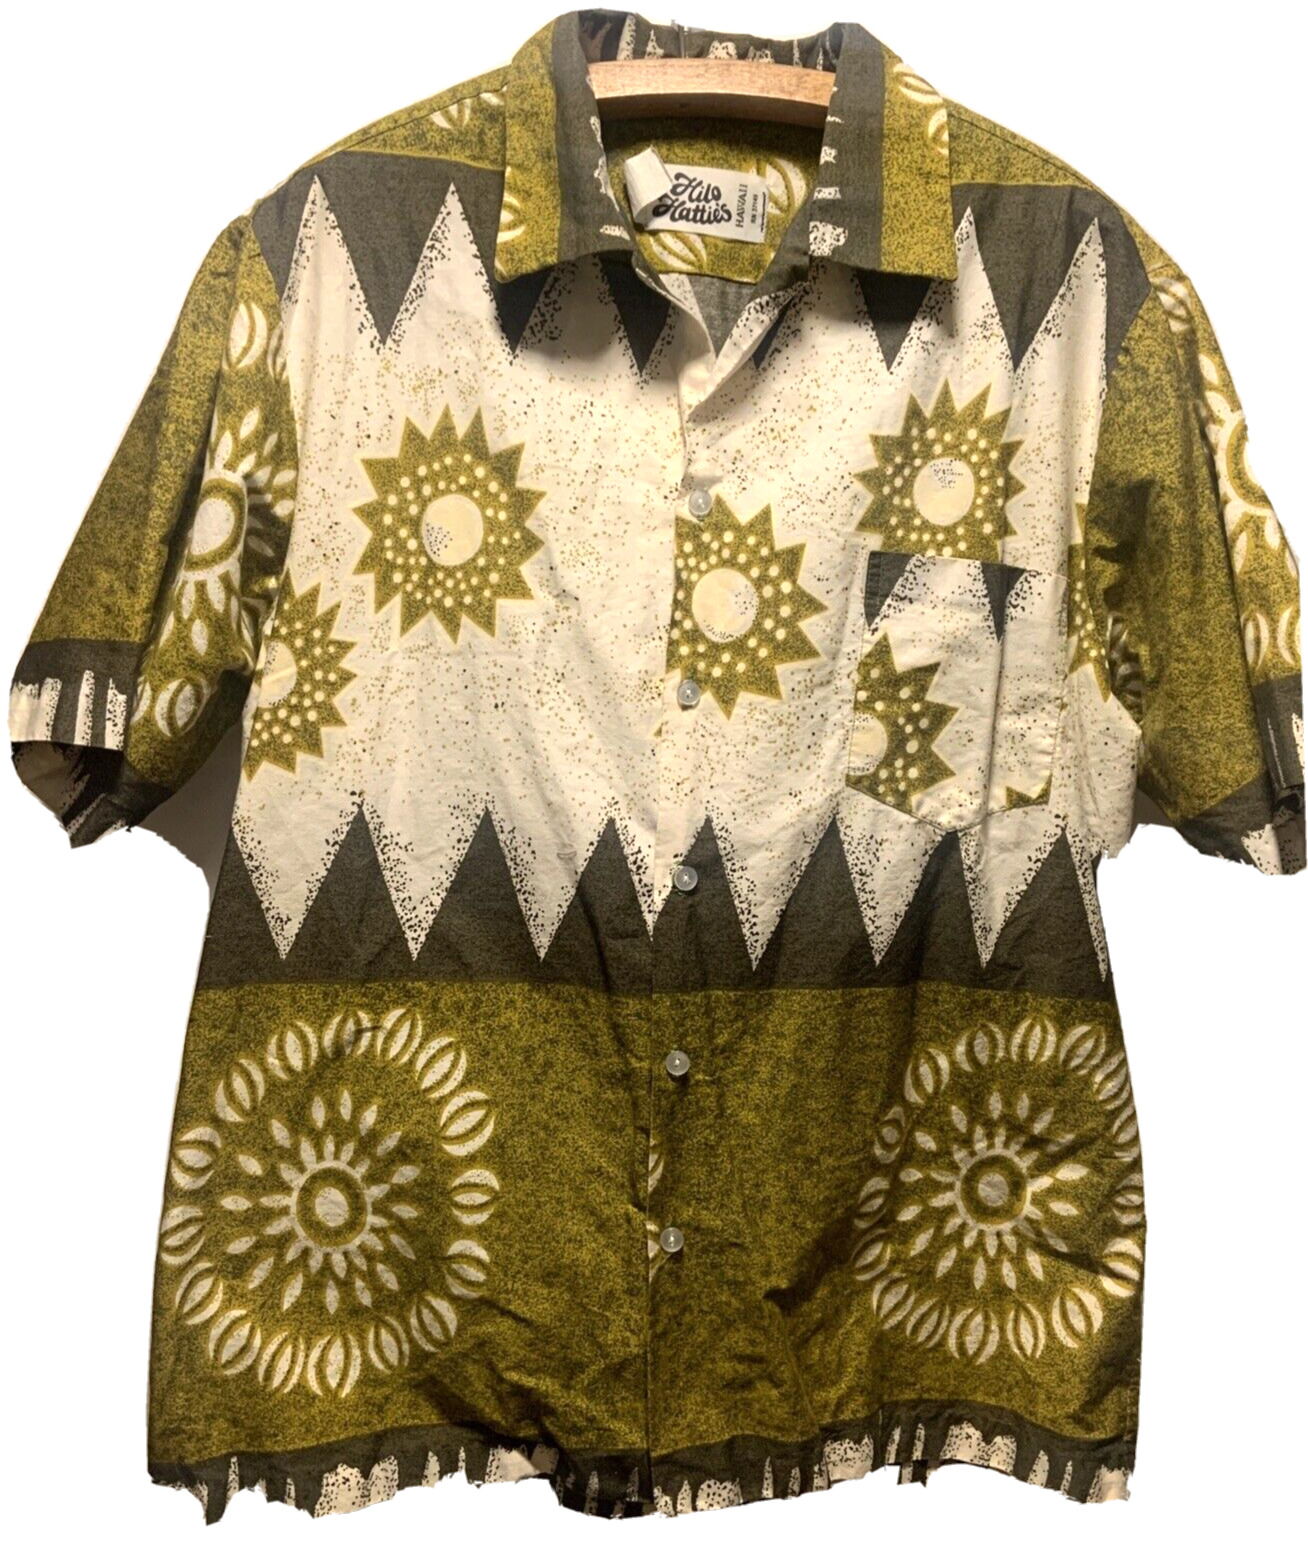 Hilo Hattie Men\'s Hawaiian Shirt XL Cotton Authentic Retro Vintage